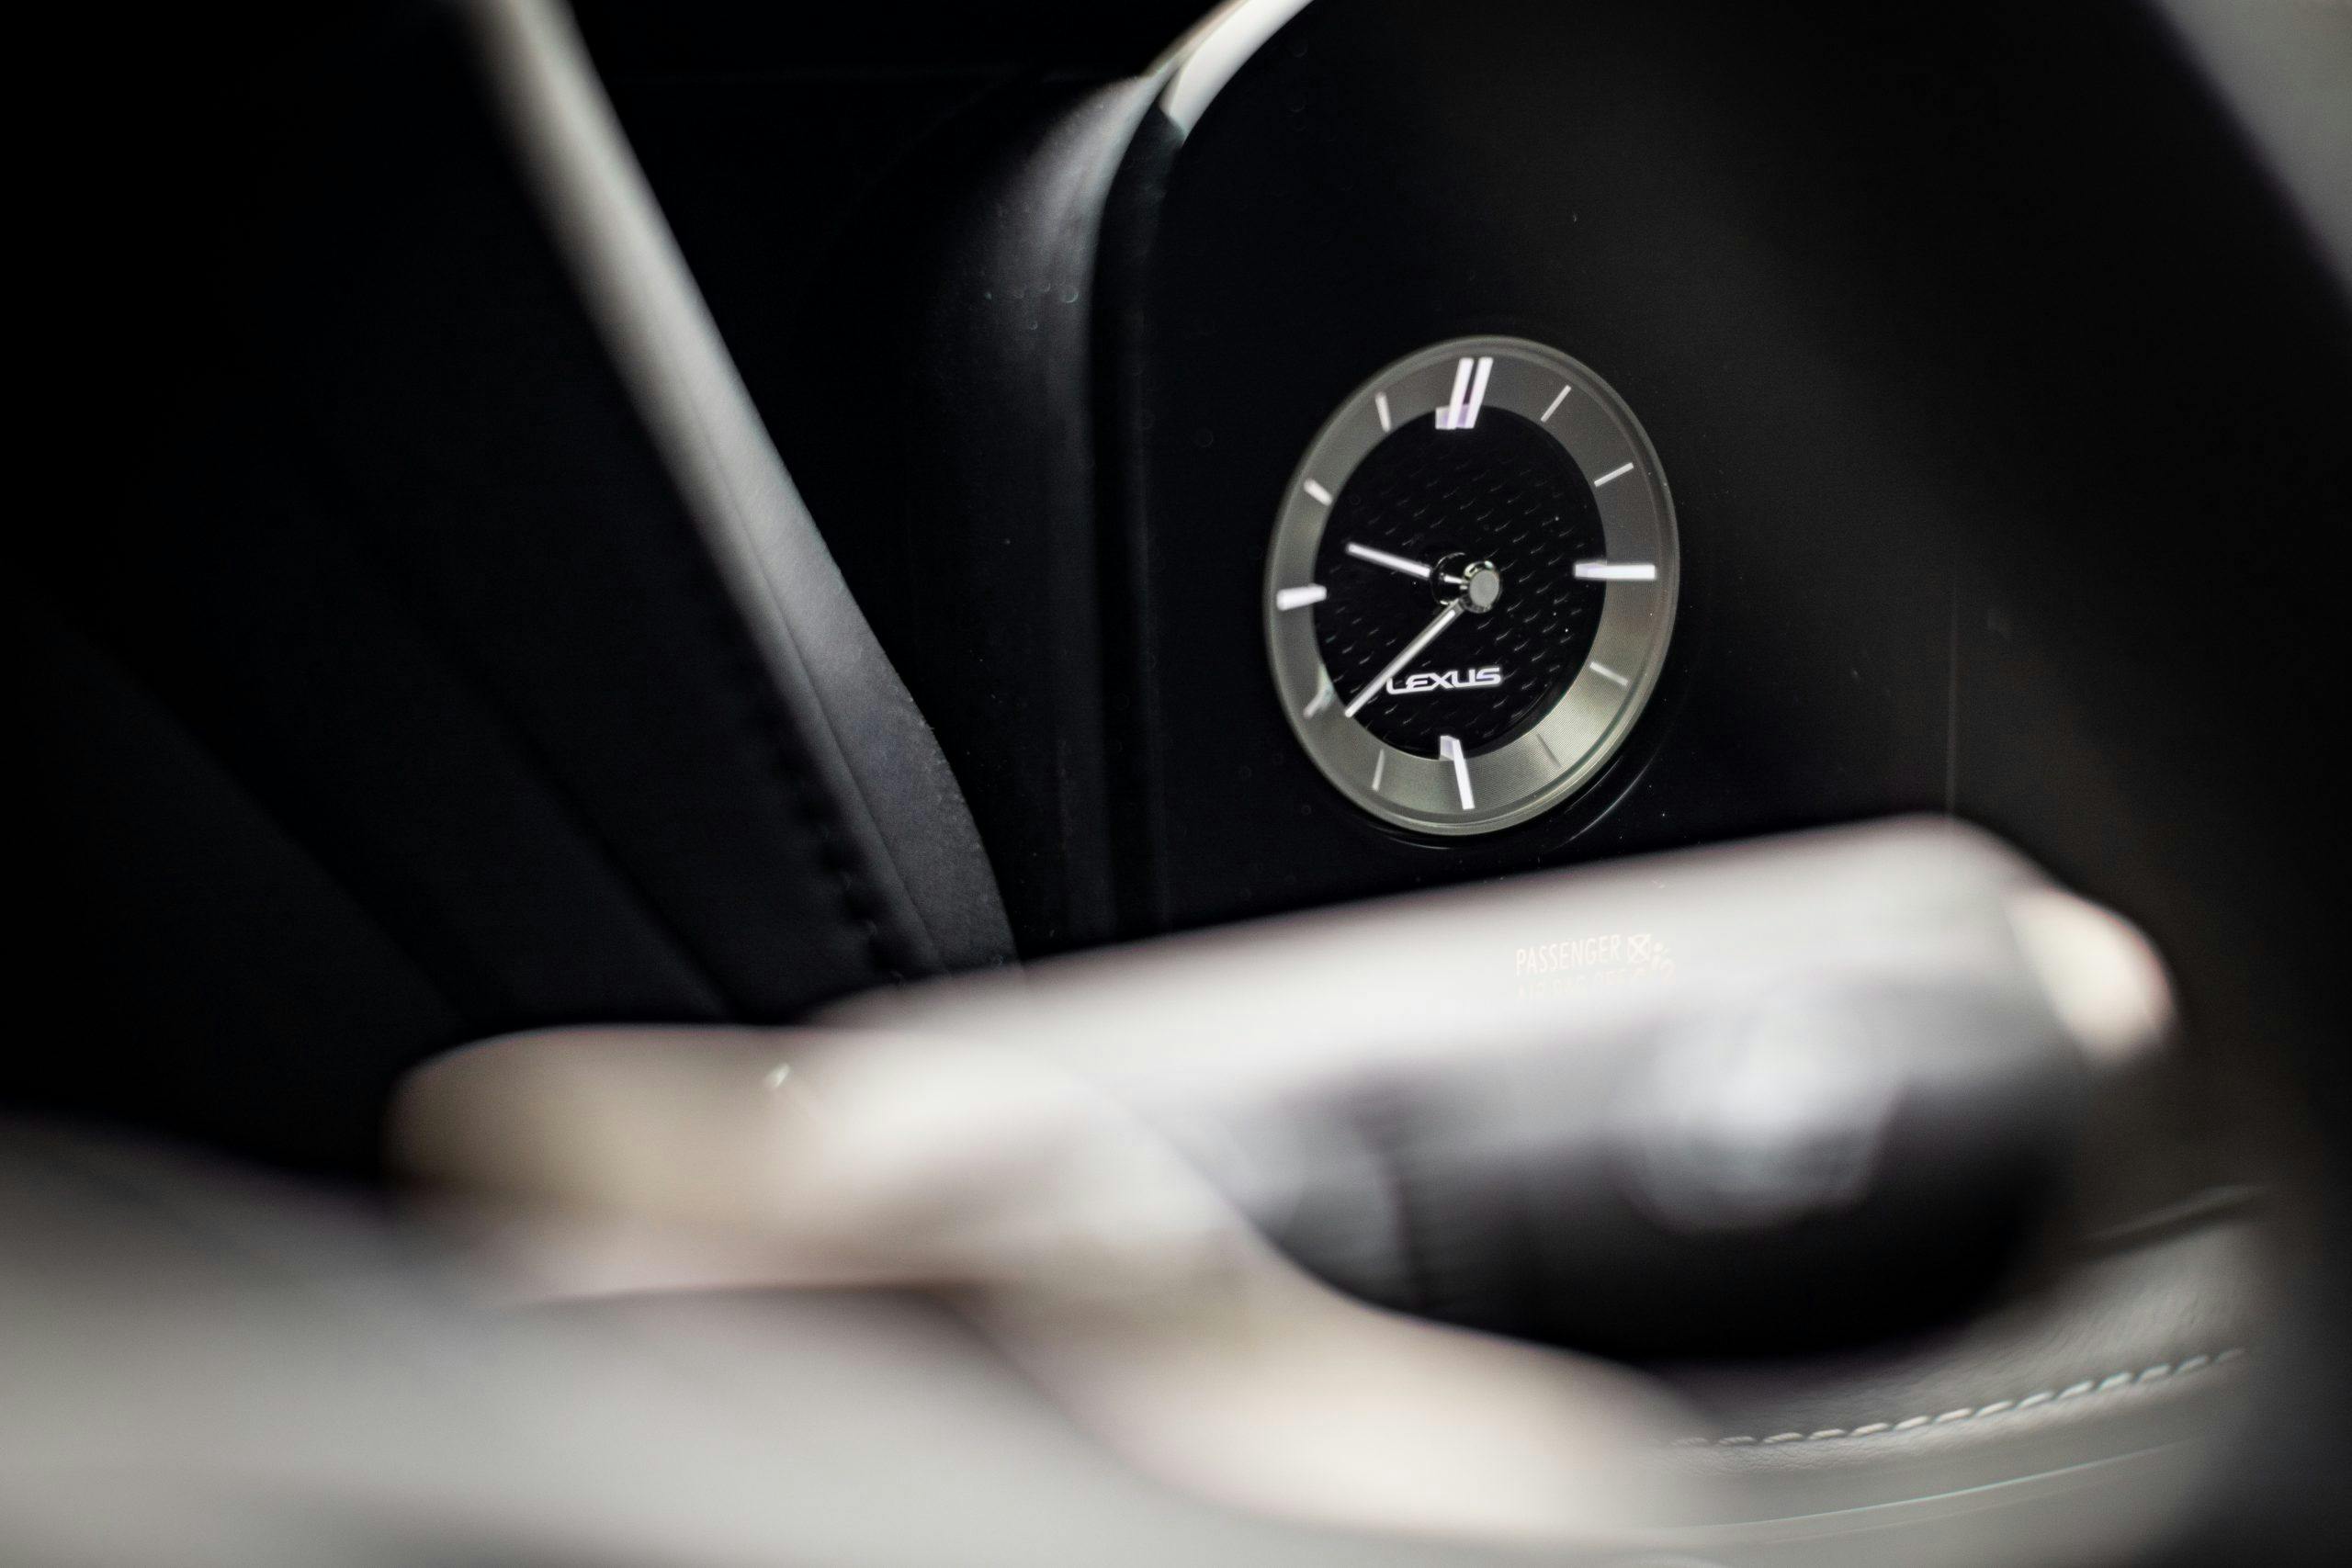 2022 Lexus LS500 F-Sport interior clock dial detail